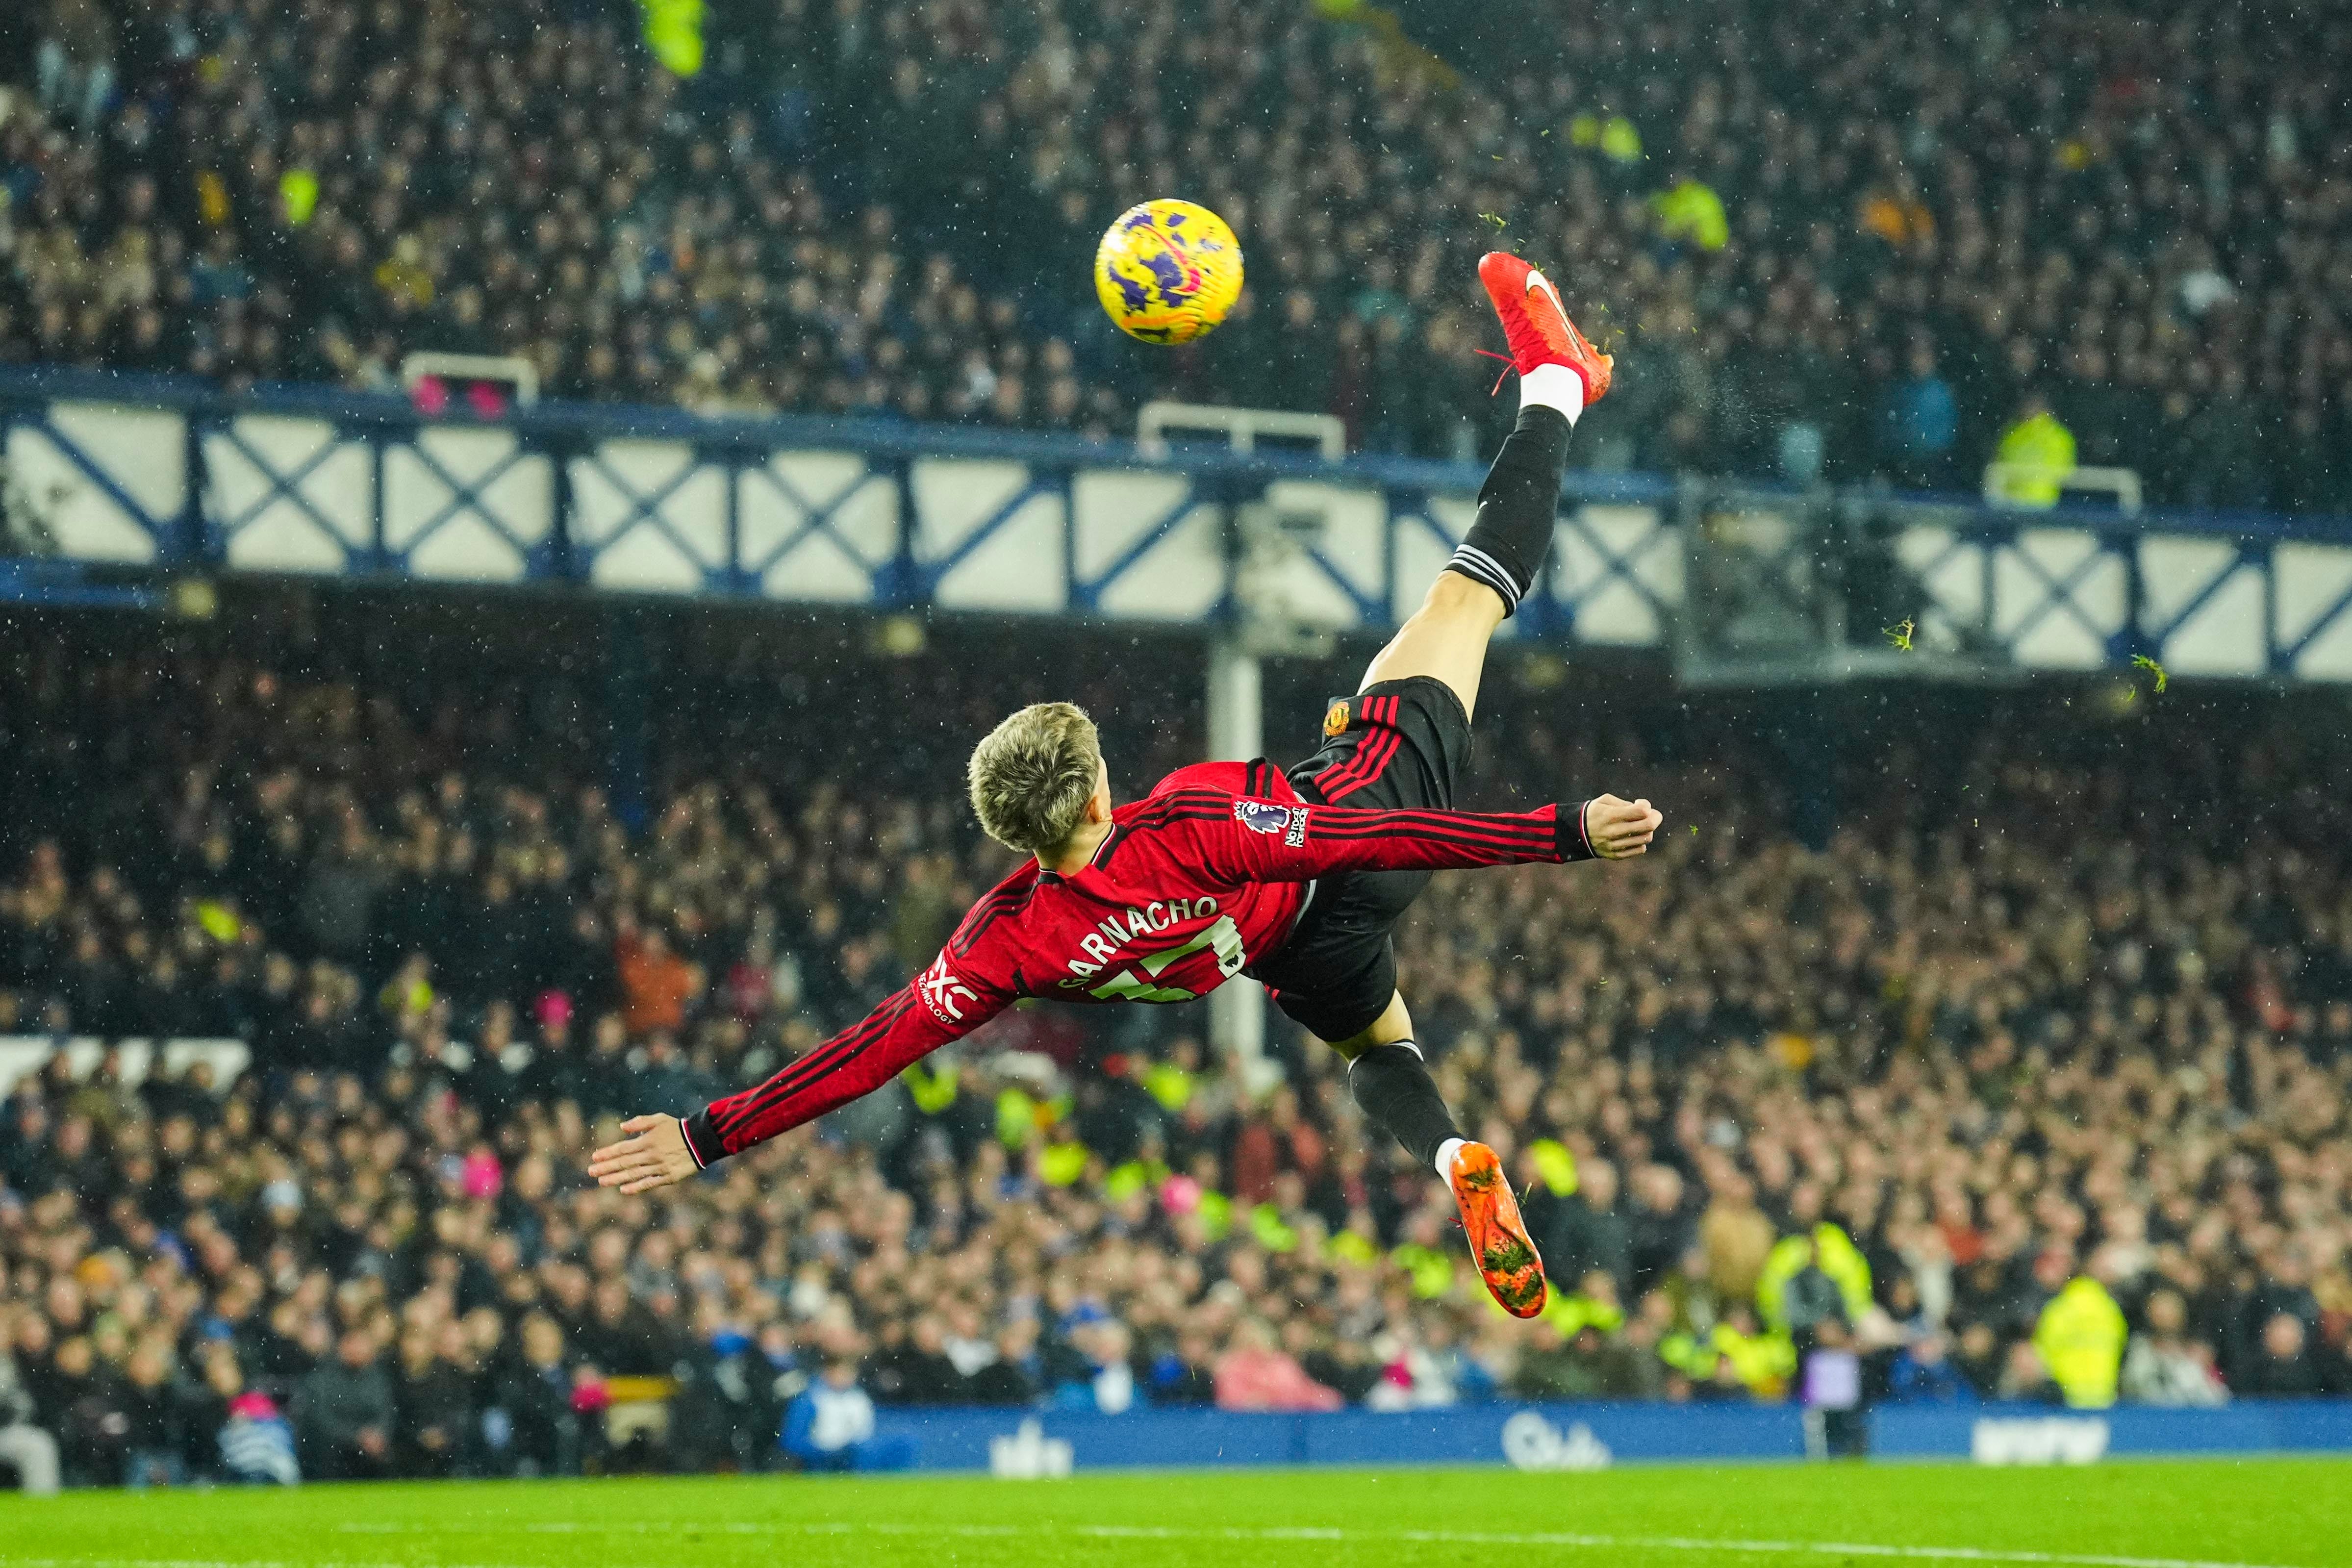 Manchester United’s Alejandro Garnacho scored a stunning overhead kick against Everton